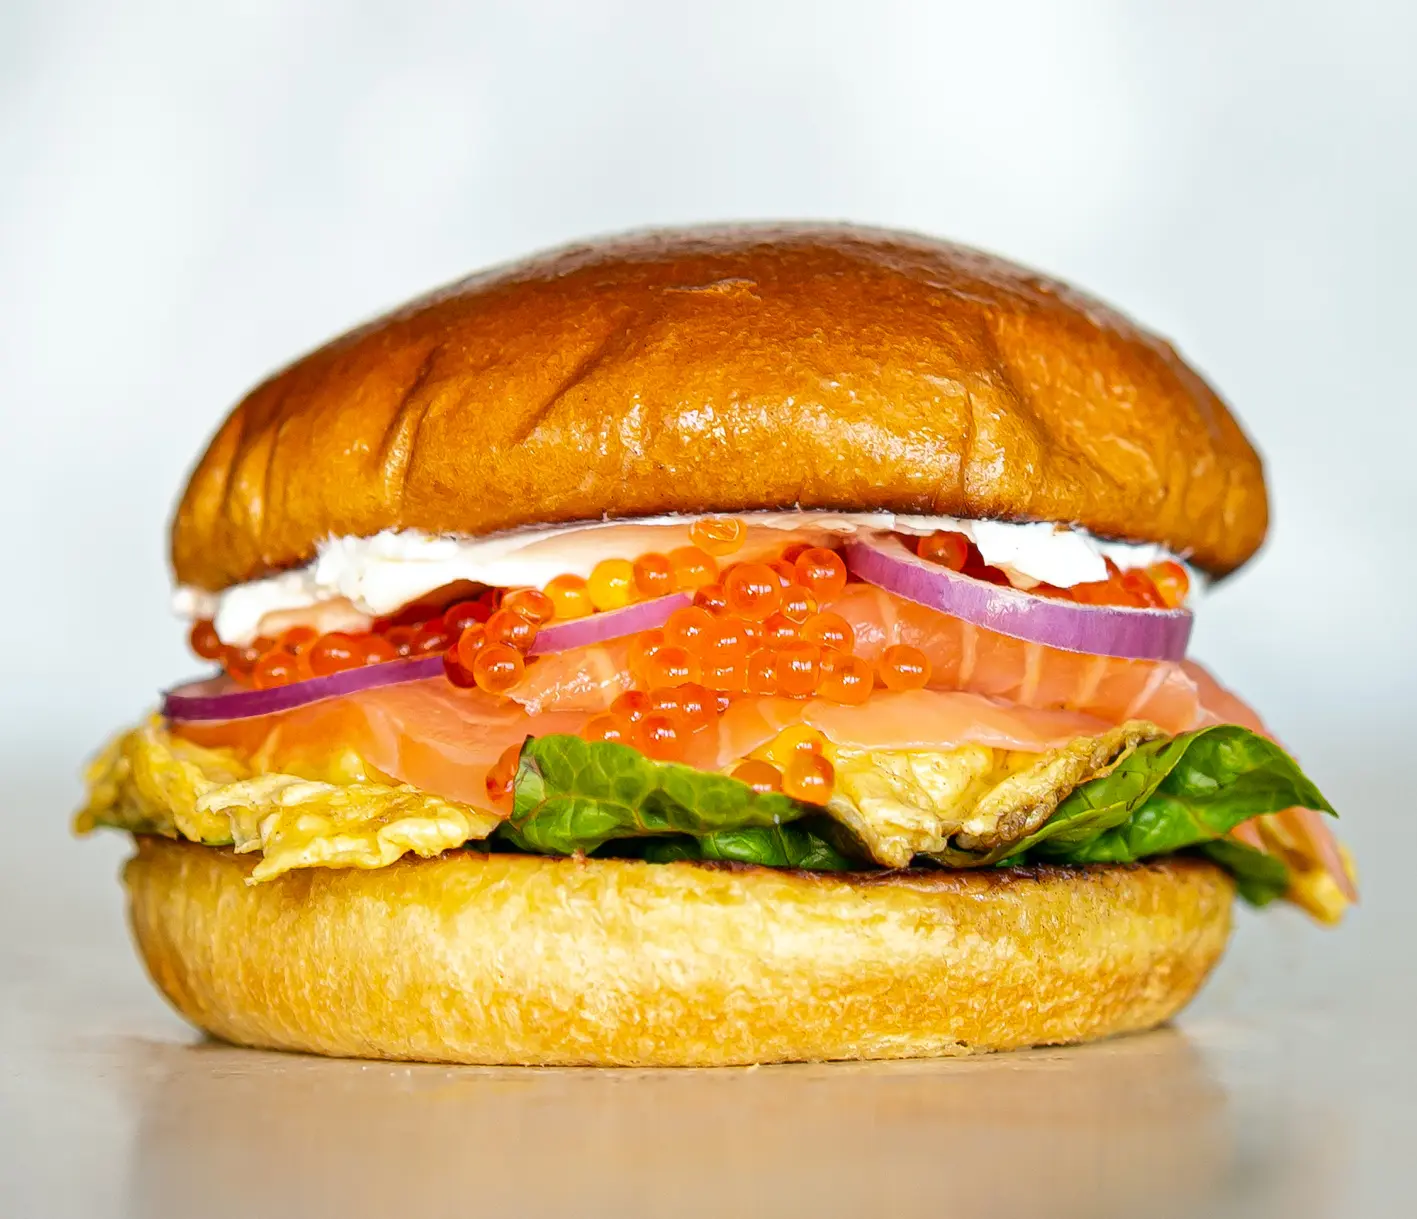 smoked salmon burger - Are salmon burgers the same as salmon